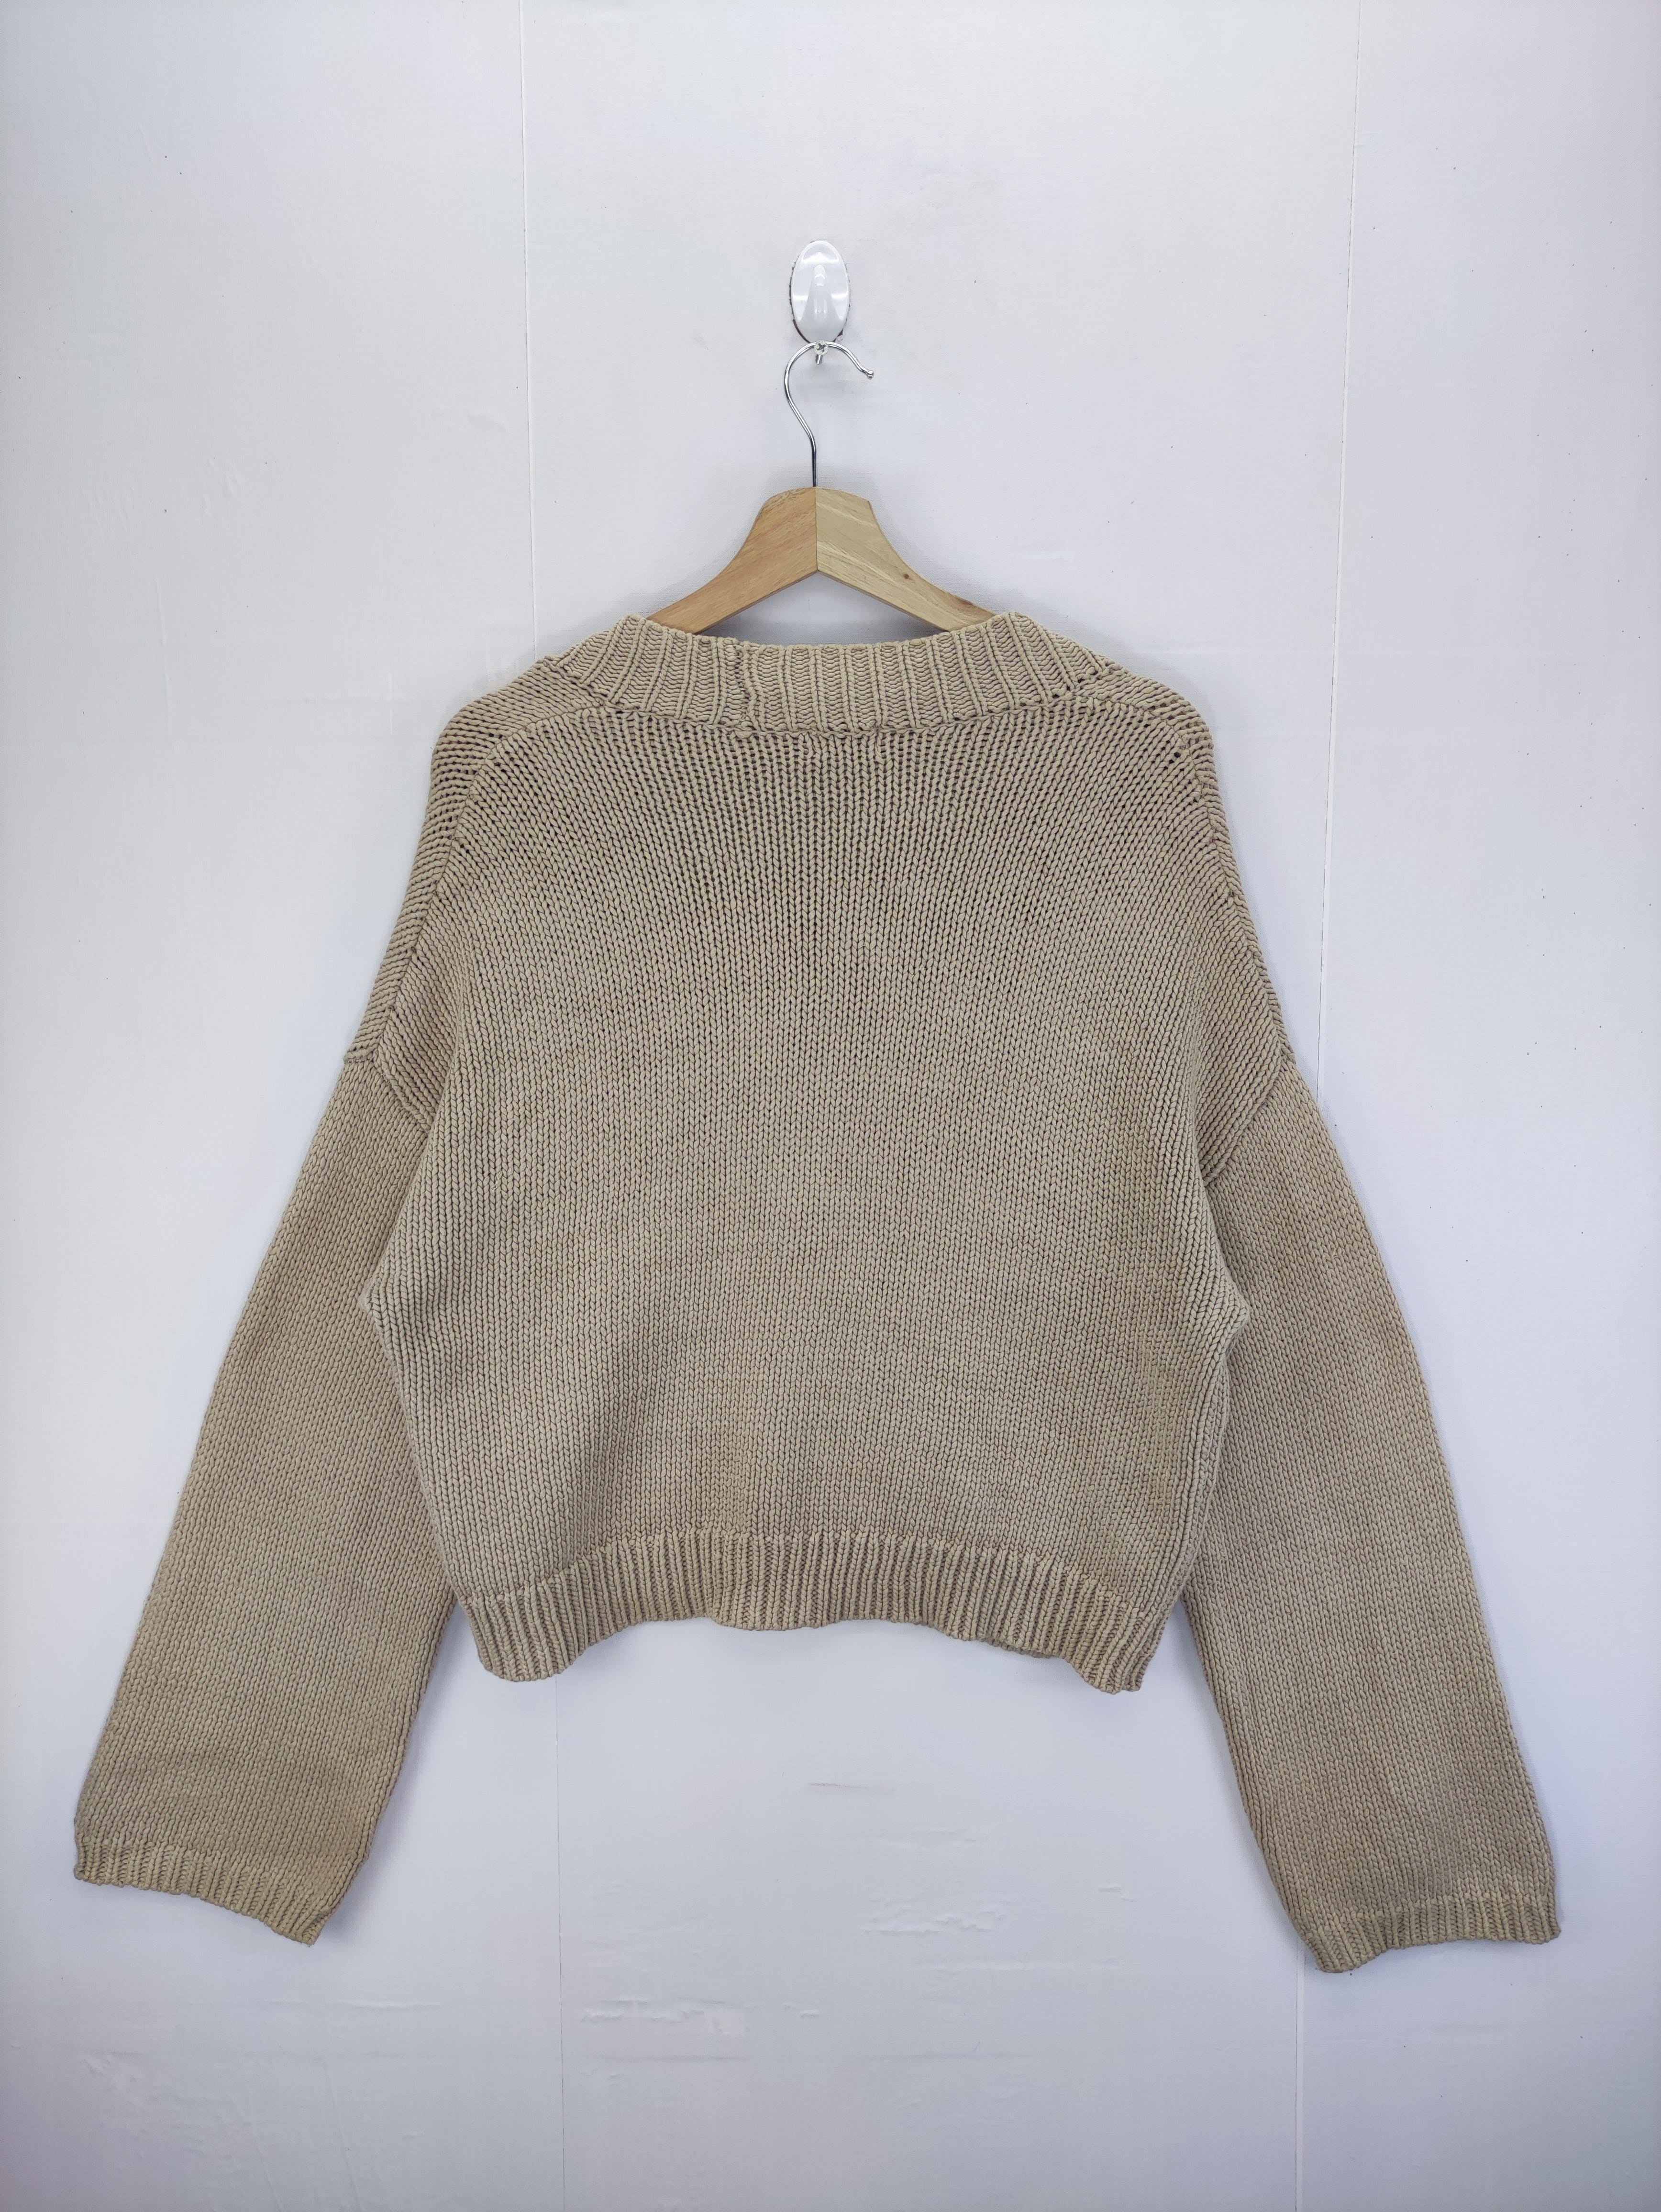 Urban Research Doors - Vintage Urban Research Cardigan Knit Sweater - 8